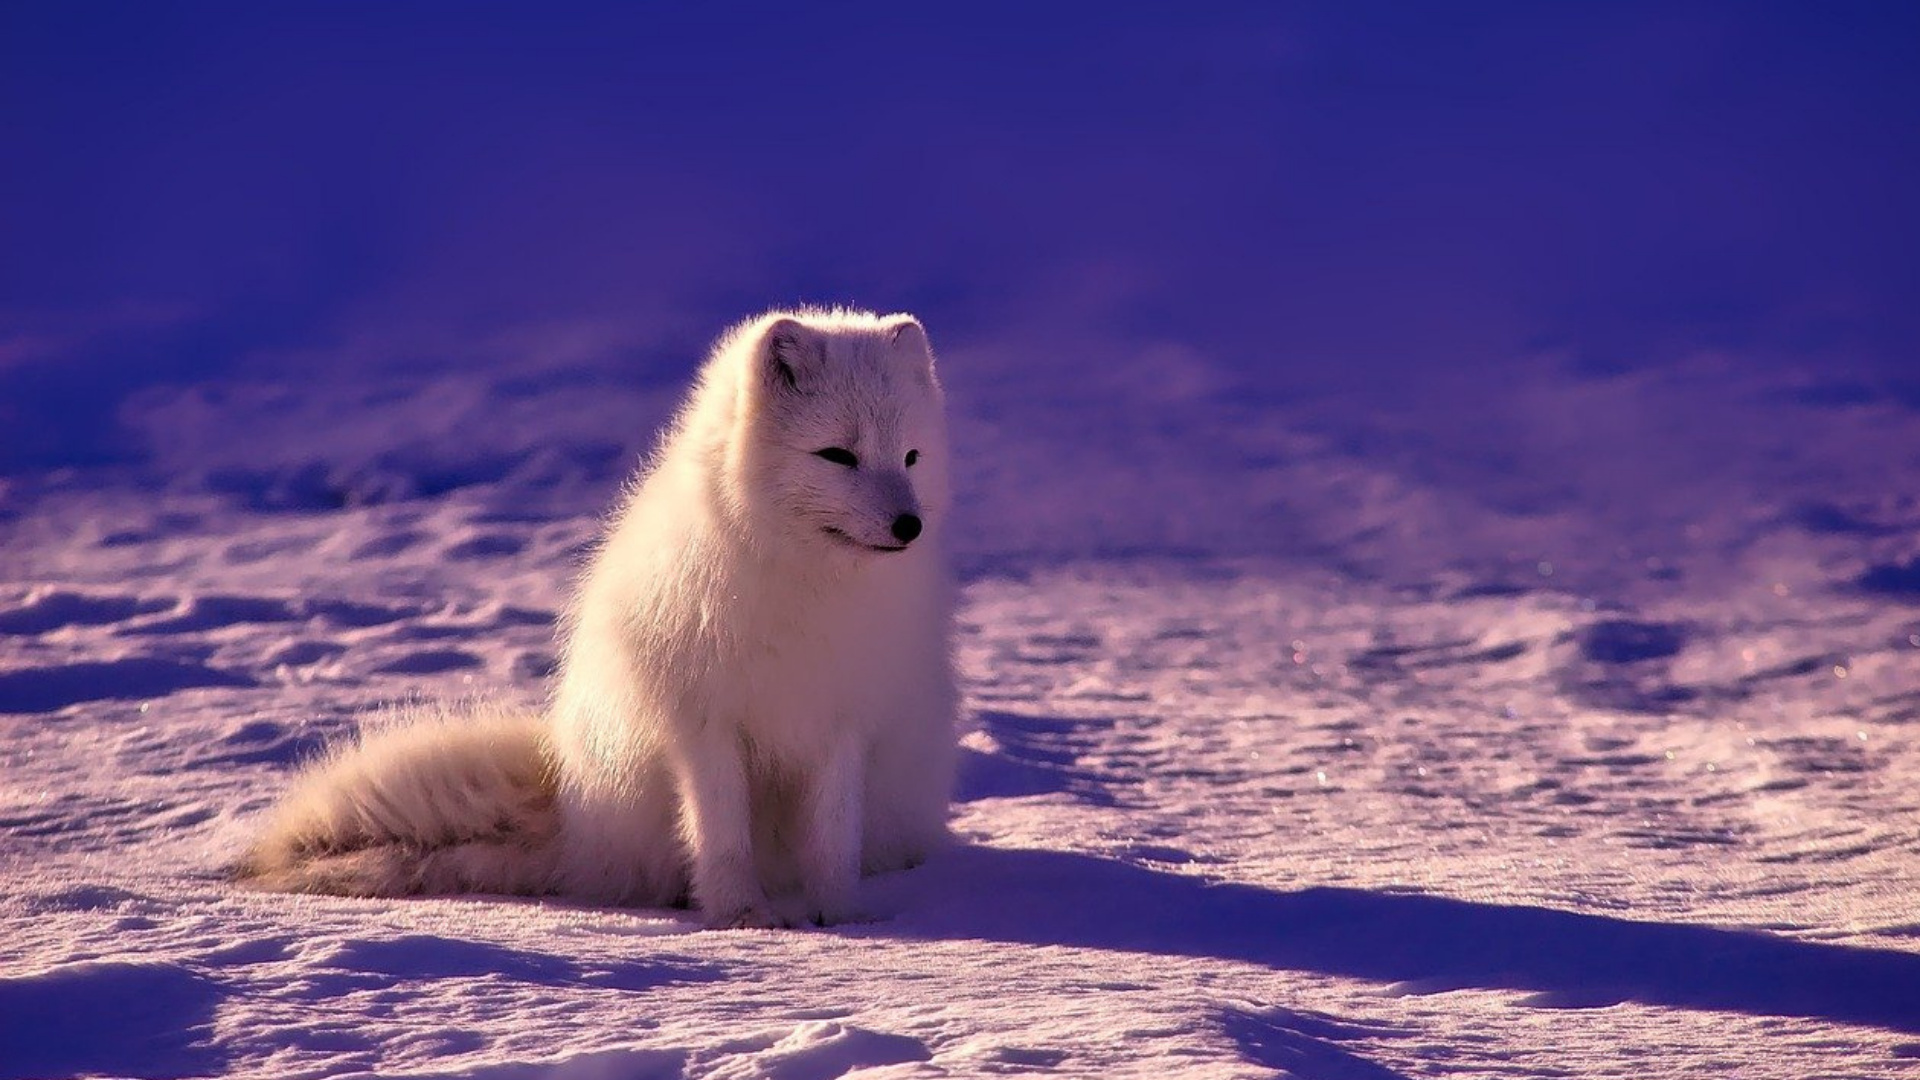 Norway fox wallpaper, Arctic wildlife, Nature's glory, Majestic imagery, 1920x1080 Full HD Desktop